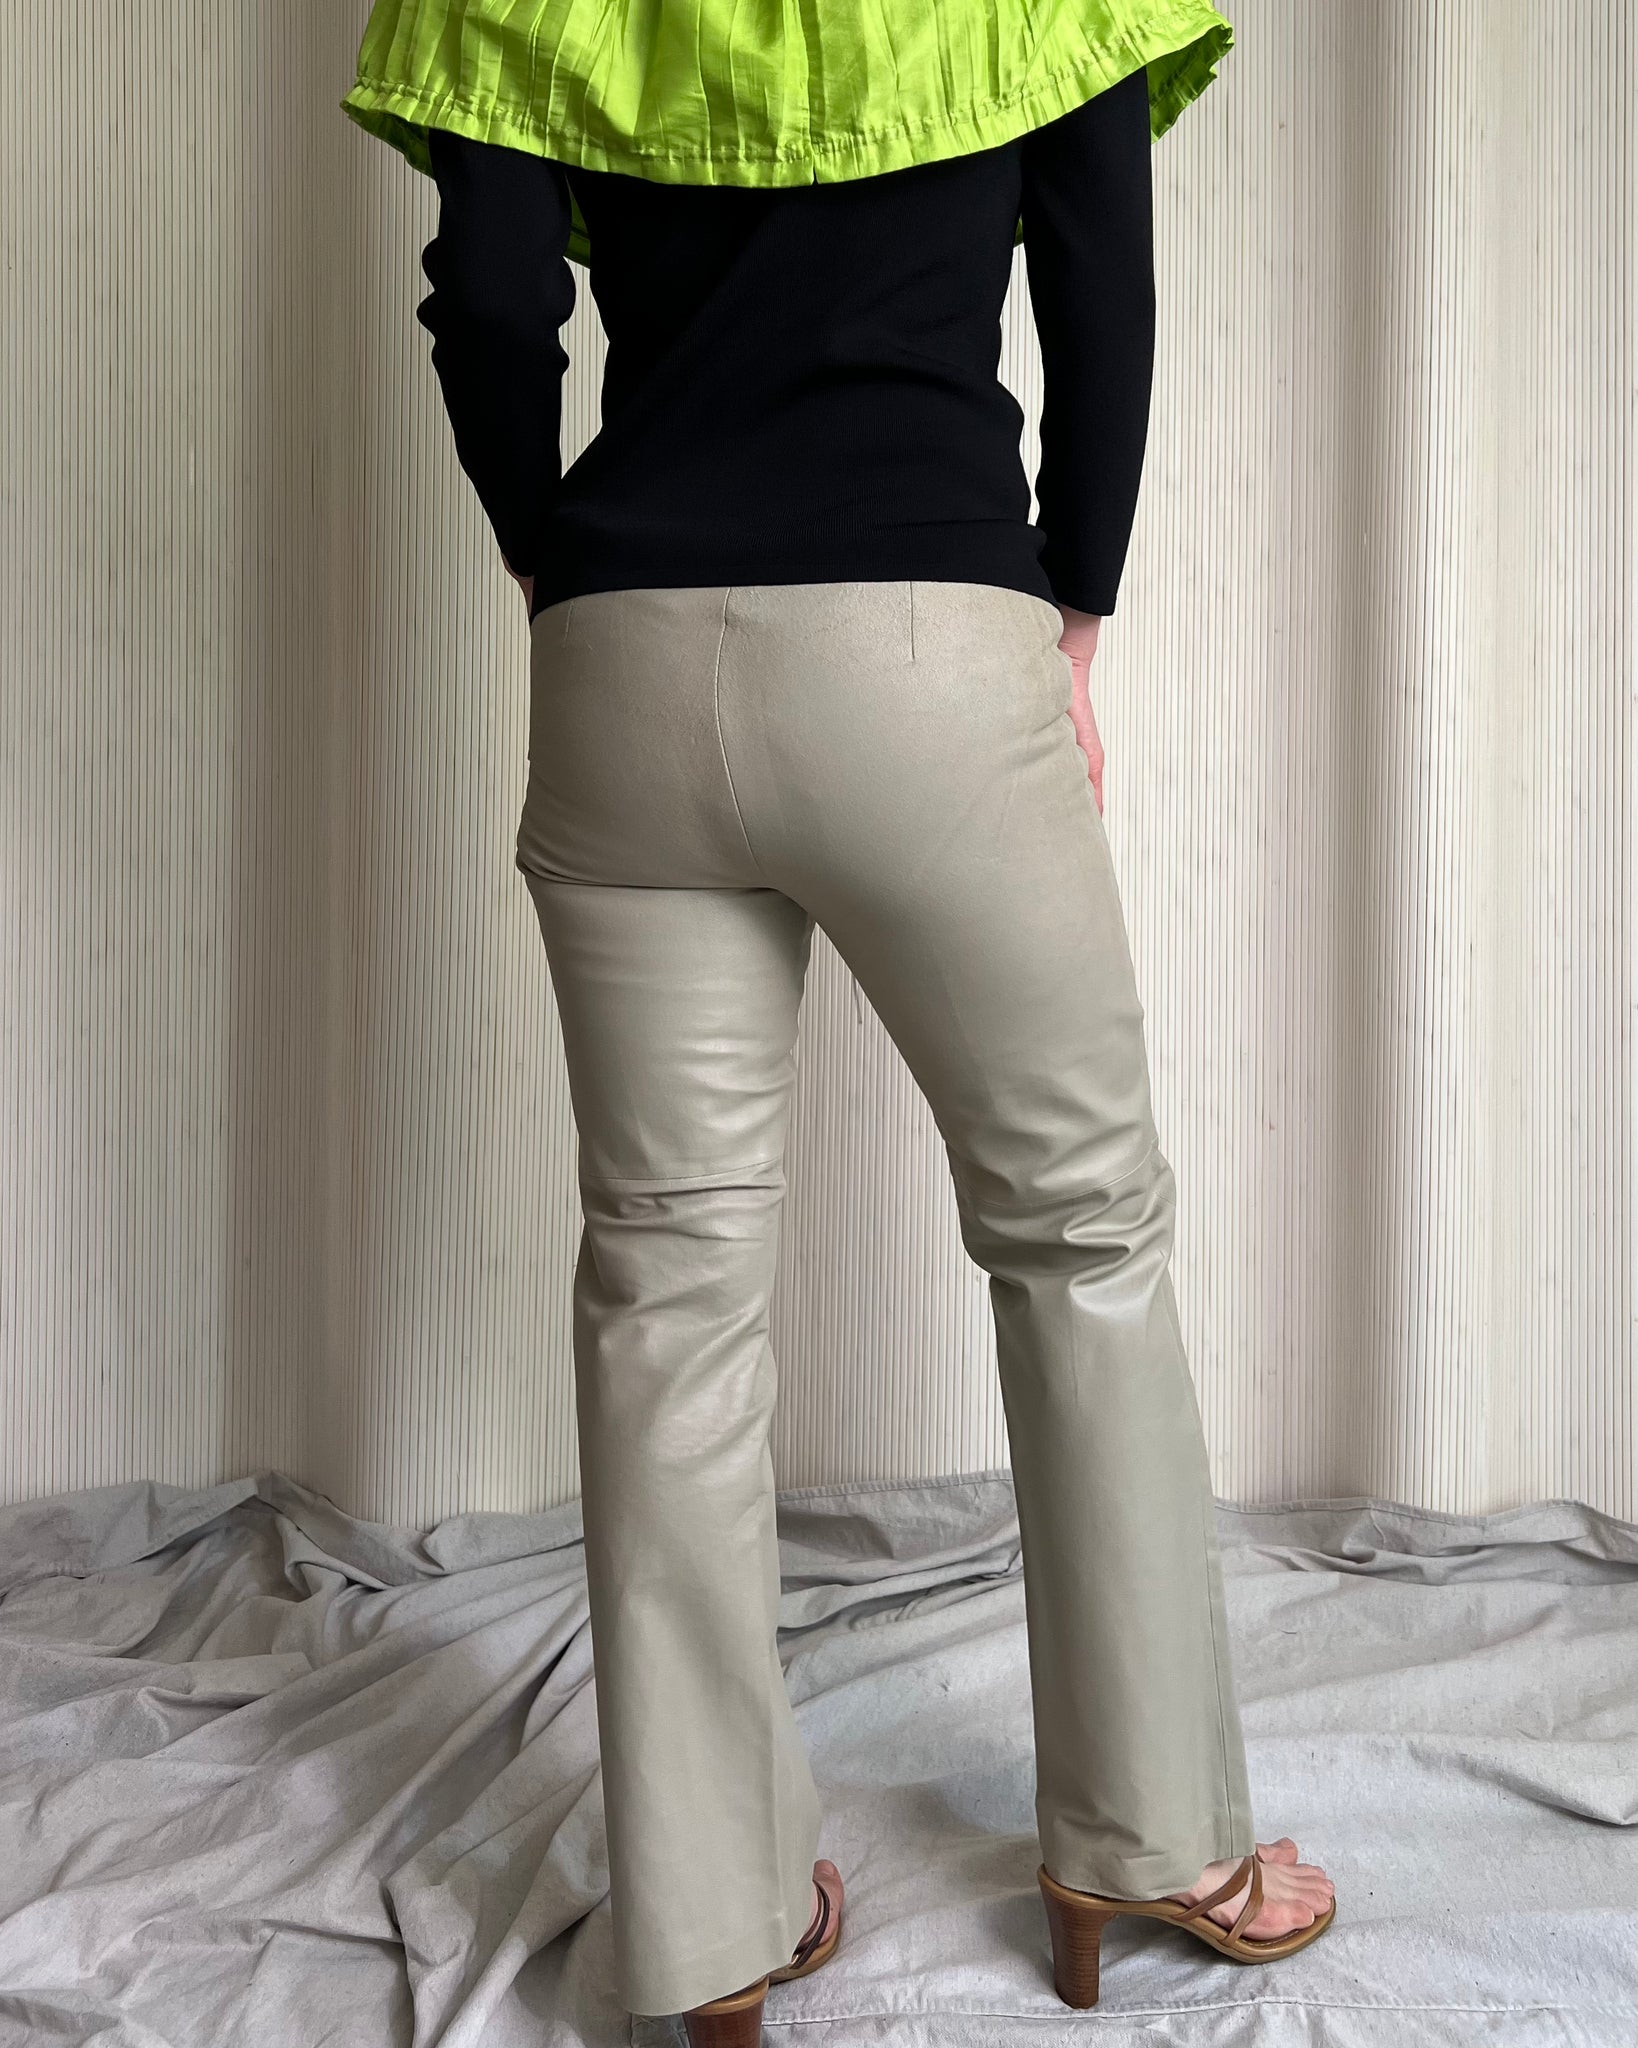 90s Tan Leather Bootcut Pants (Fits XS)